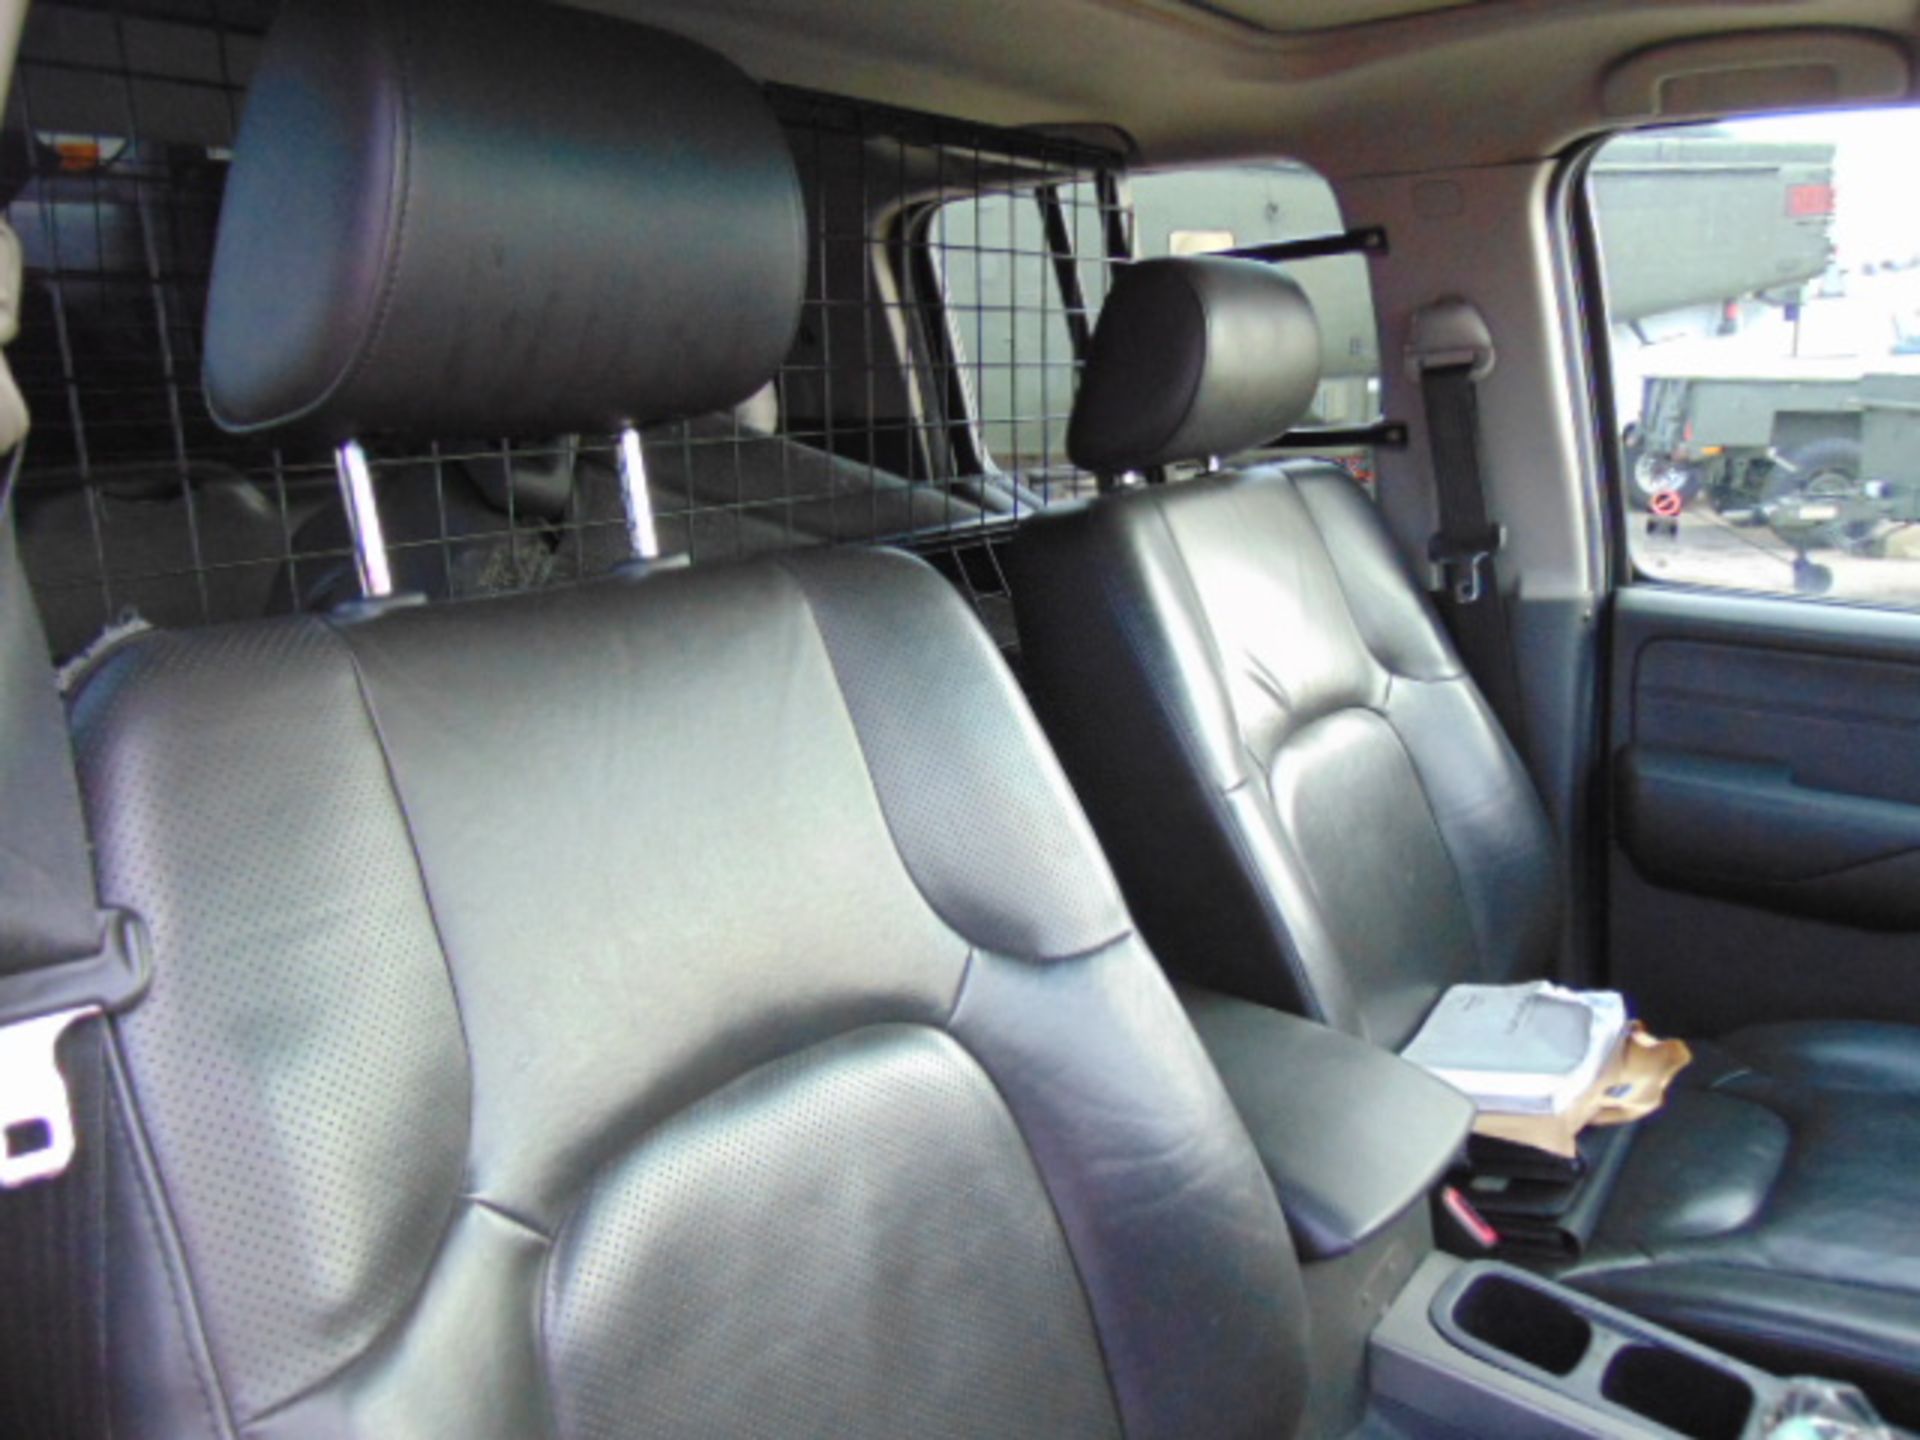 2008 Nissan Navara Aventura Double Cab 2.5 dCi Incident Response Vehicle - Image 15 of 24